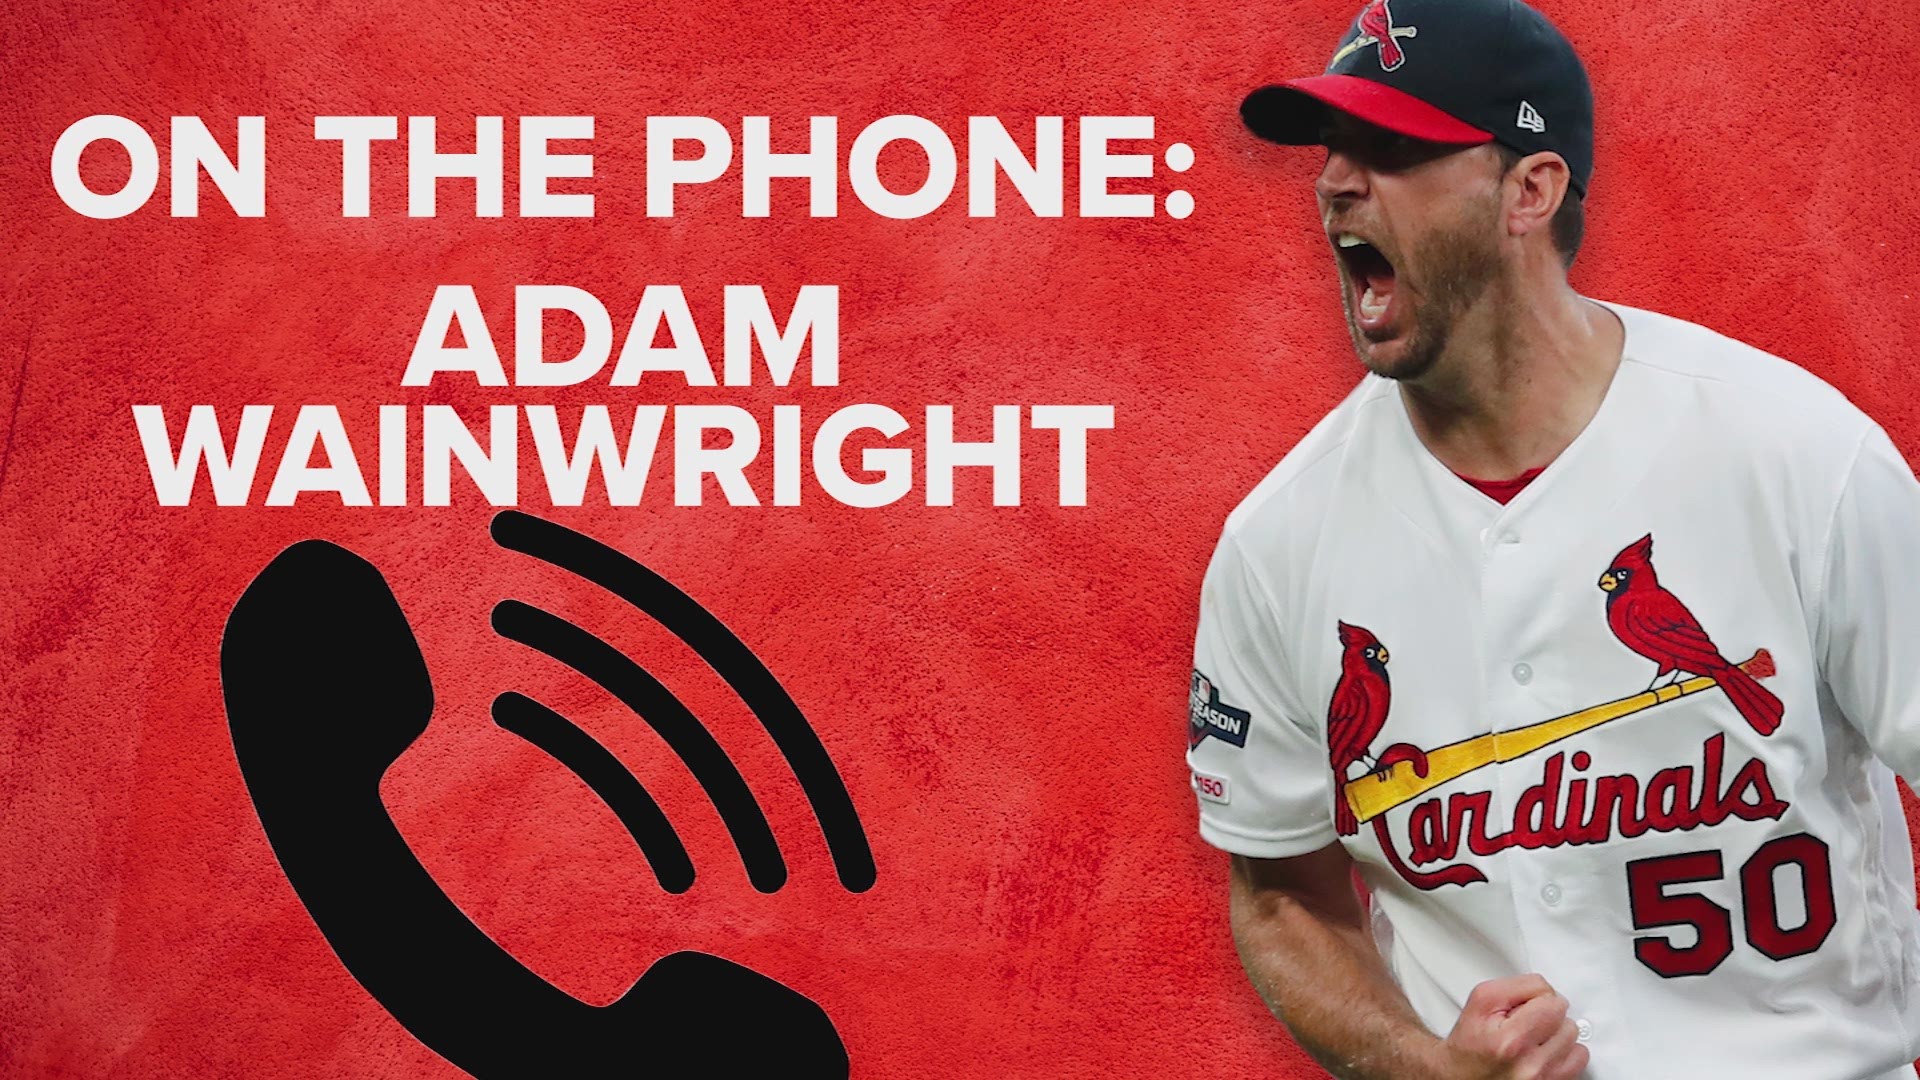 Adam Wainwright allows 4 runs over 5 innings in season debut - The